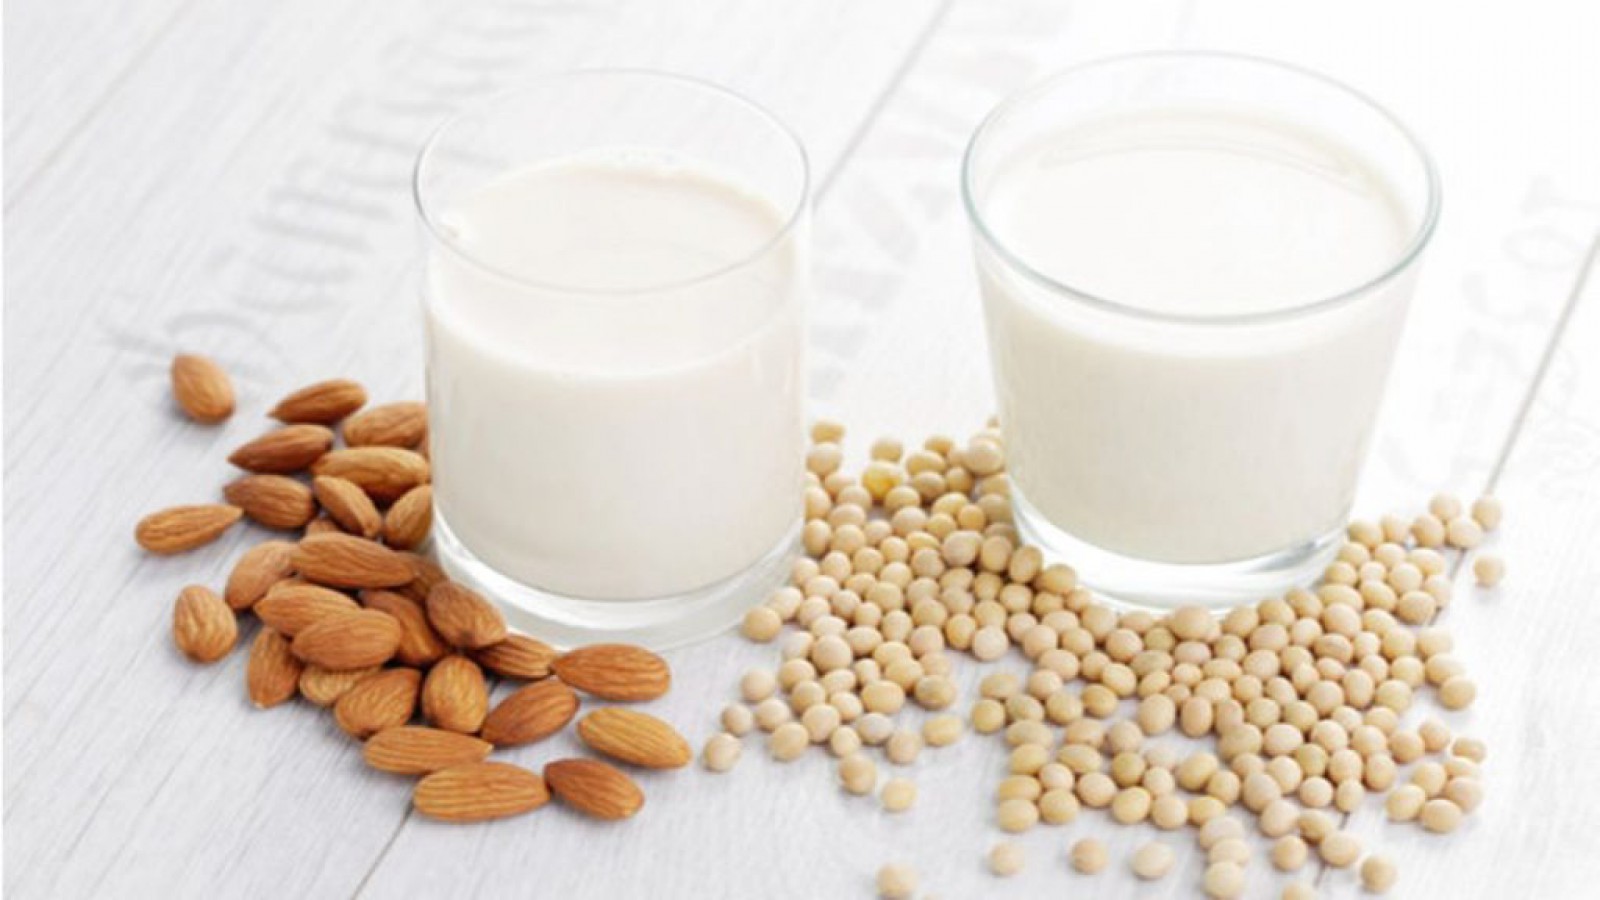 Image Manfaat Kacang Almond Yang Bisa Didapatkan Bayi Pada Awal Tumbuh Kembangnya